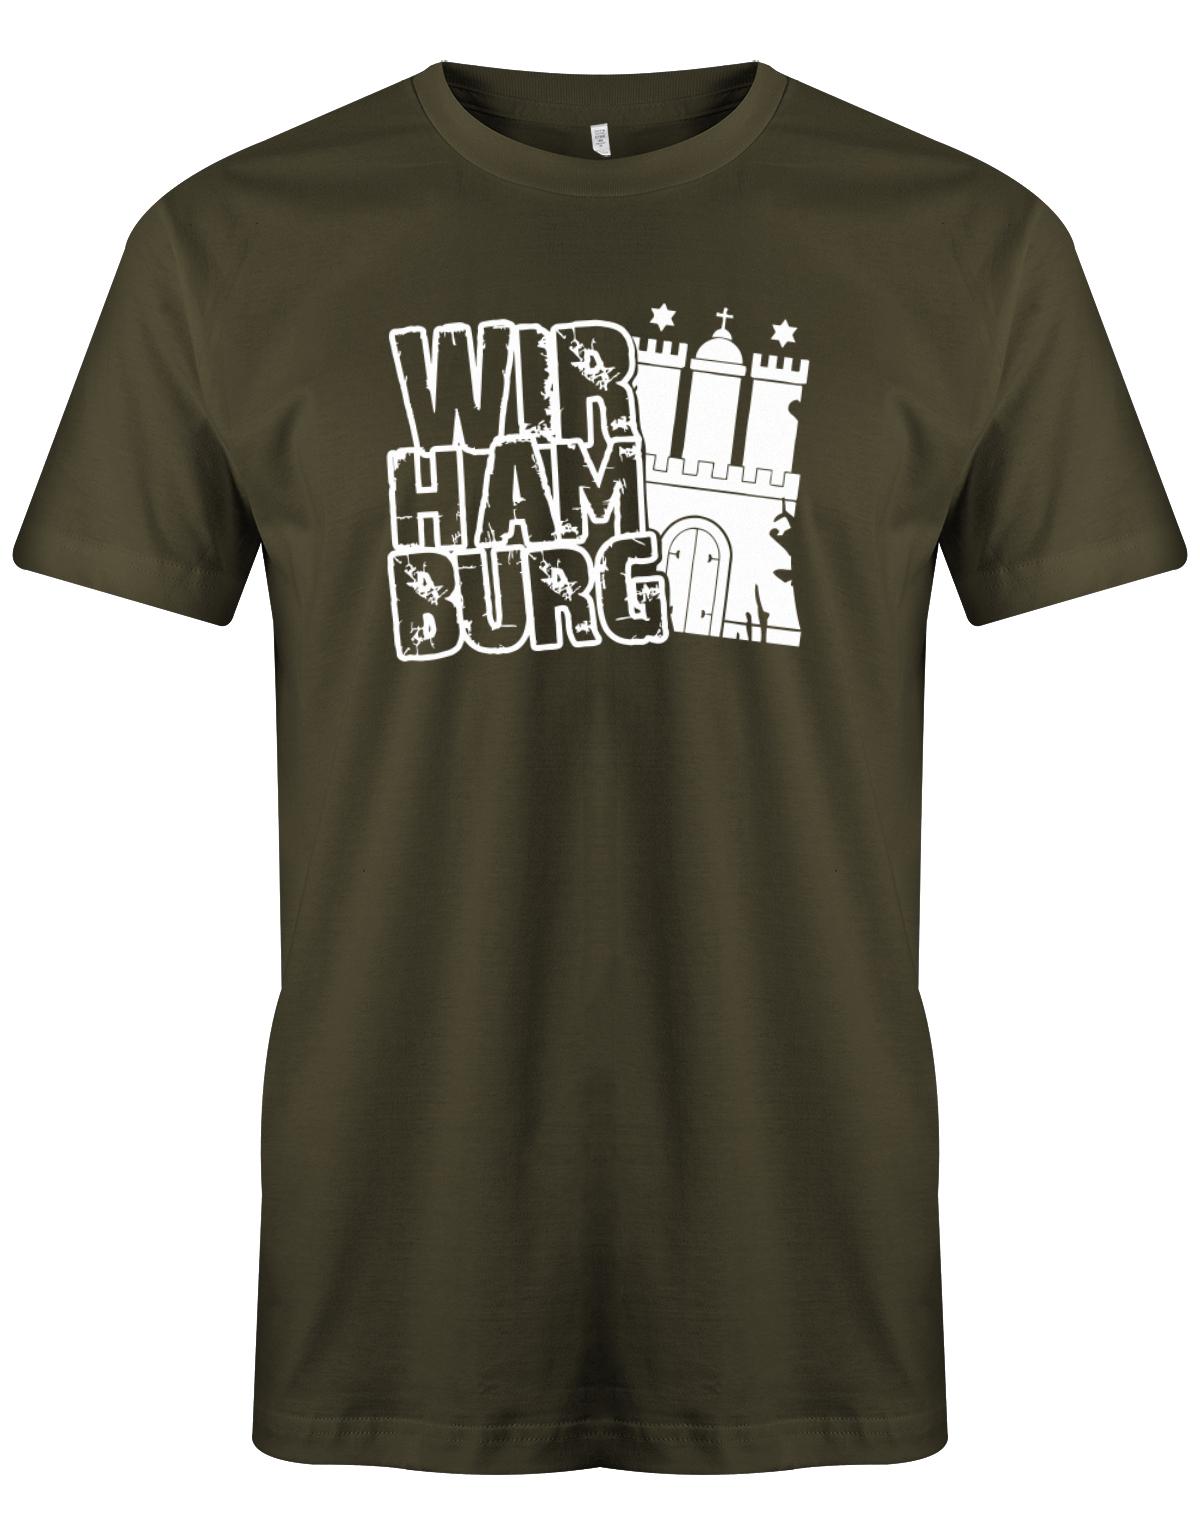 Wir-Hamburg-Herren-Shirt-Army